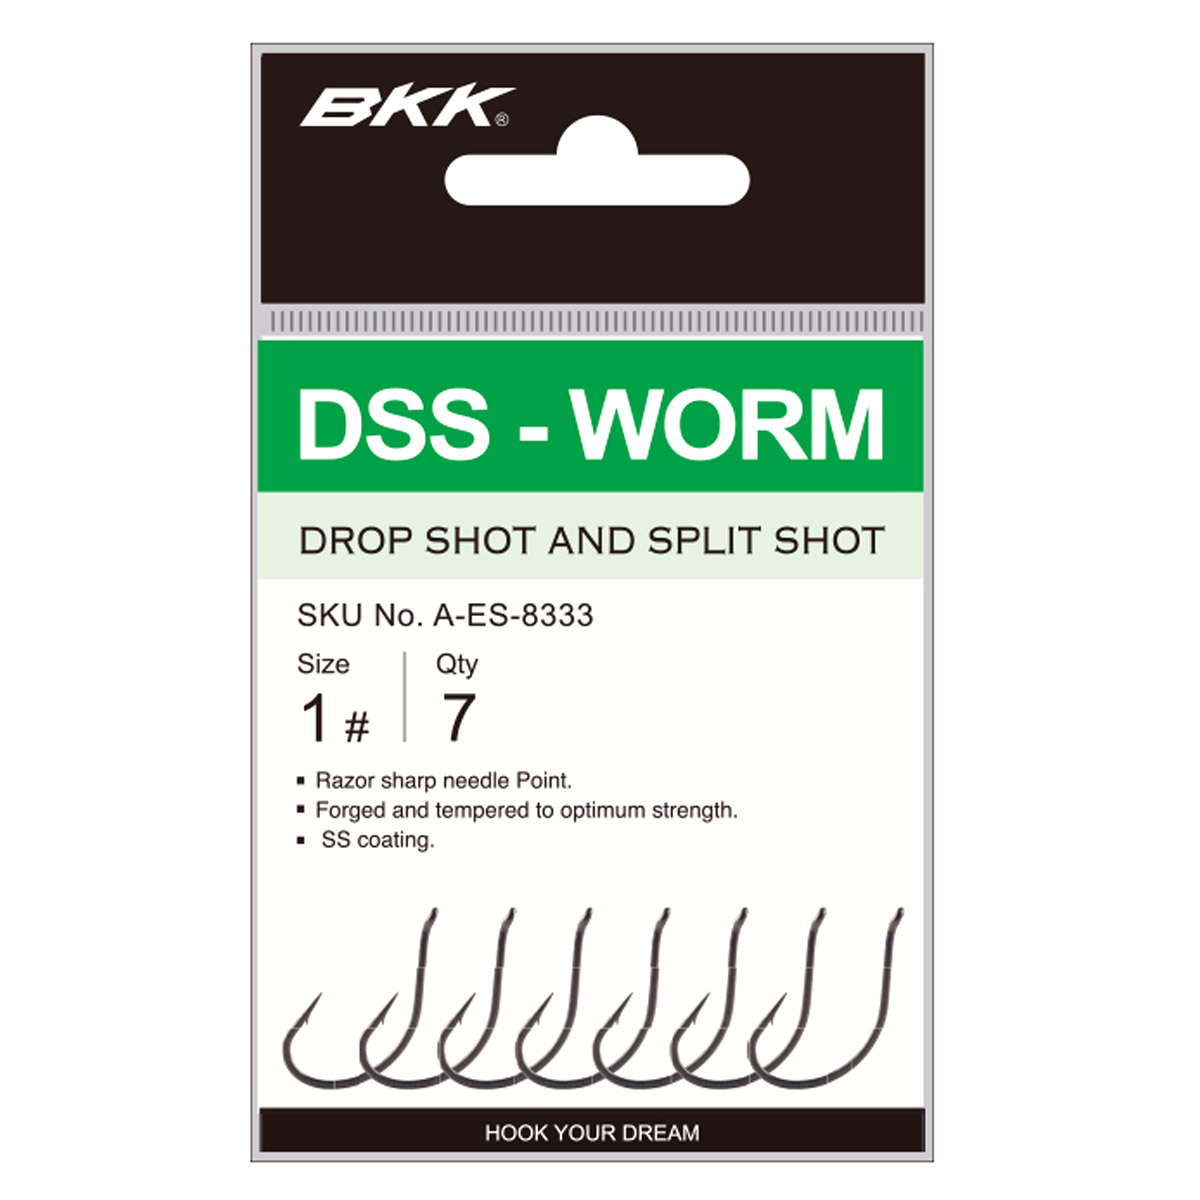 BKK DSS Worm Hook